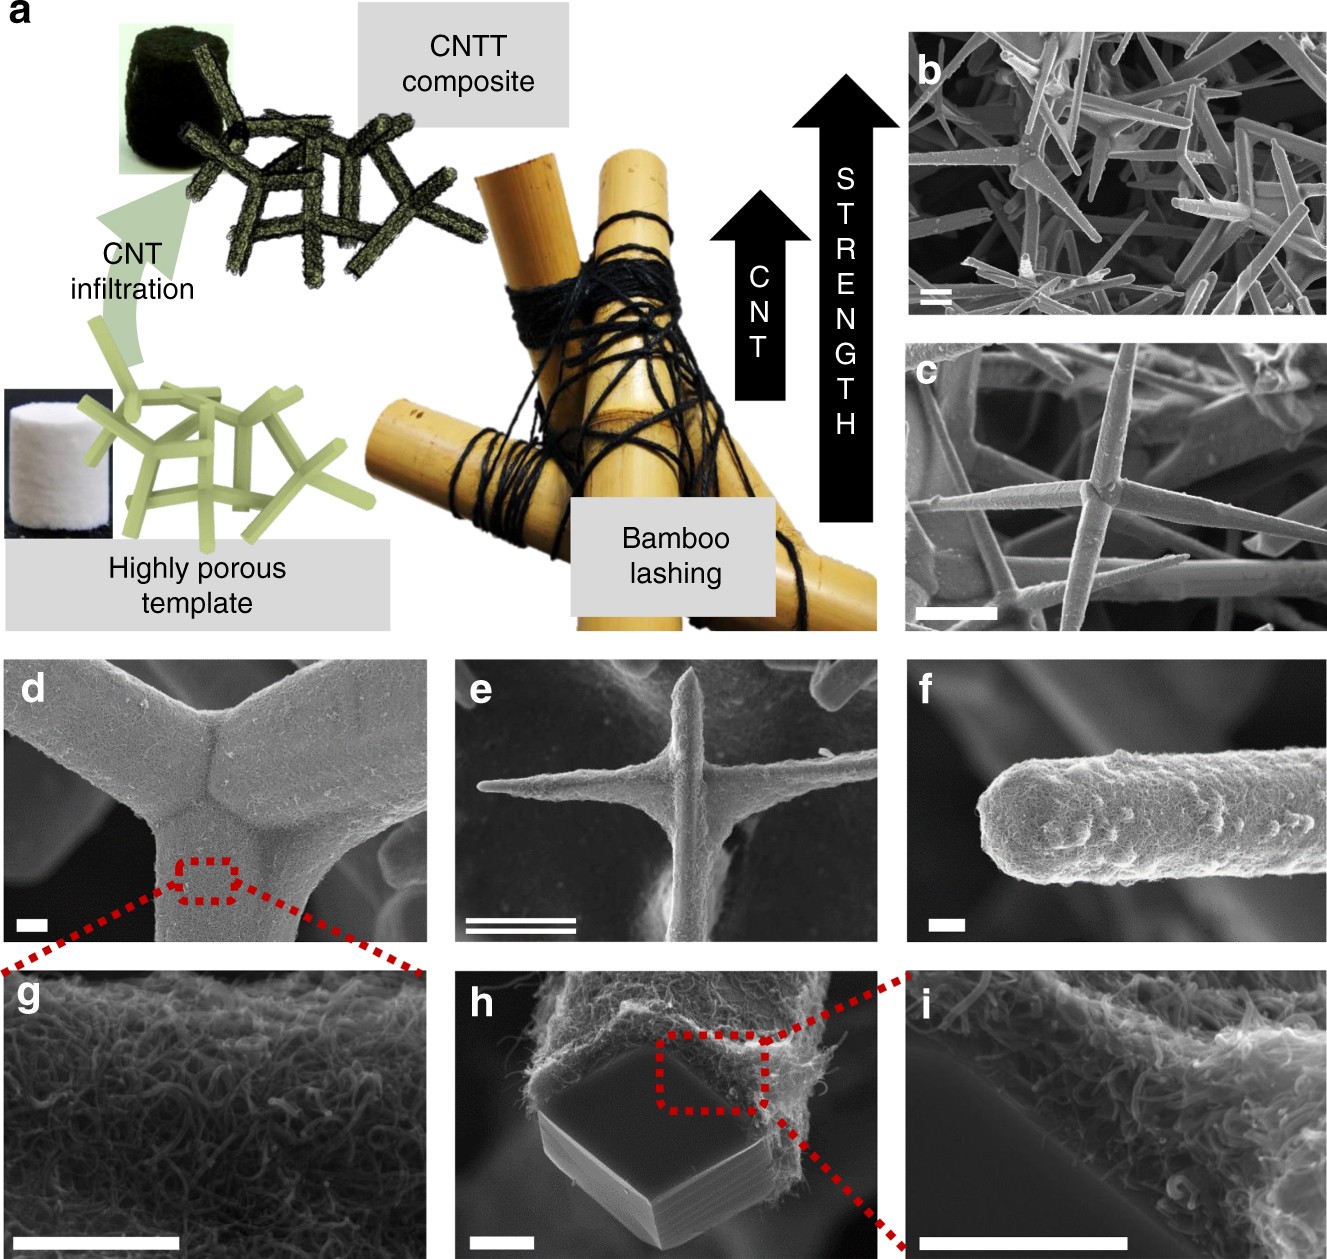 Hierarchical self-entangled carbon nanotube tube networks